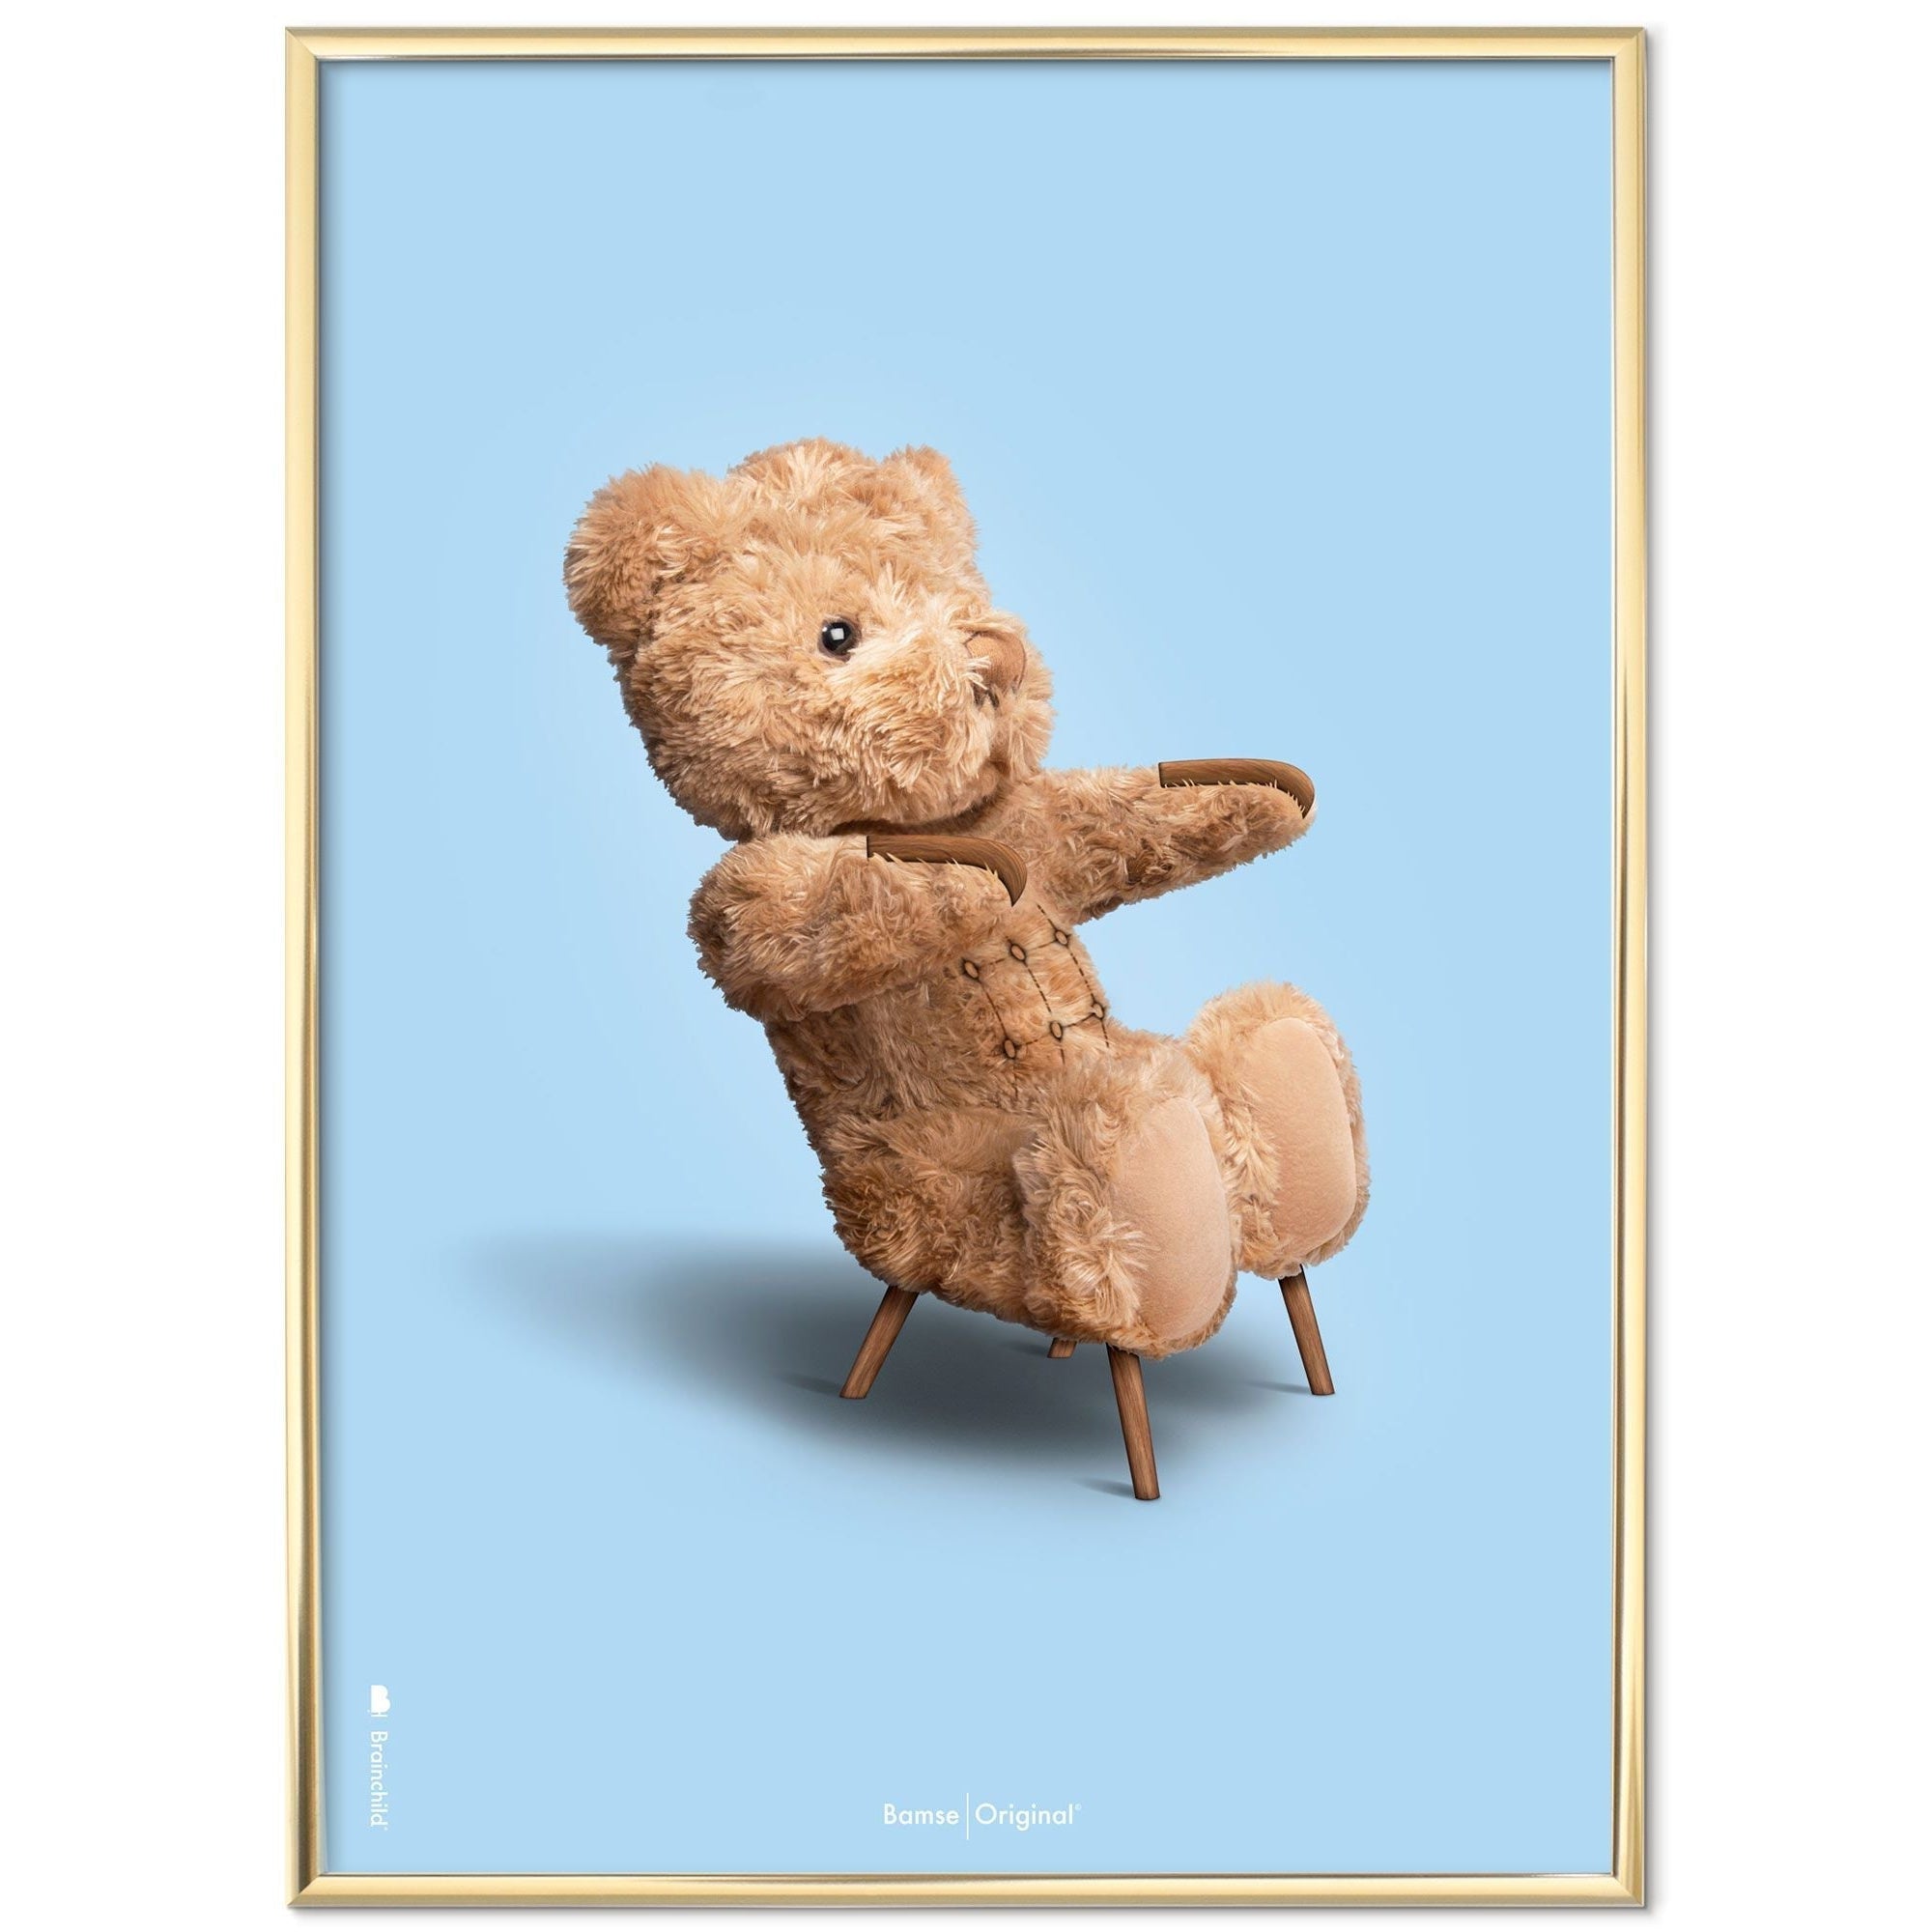 Brainchild Teddy Bear Classic Poster Brass Colored Frame 70x100 Cm, Light Blue Background